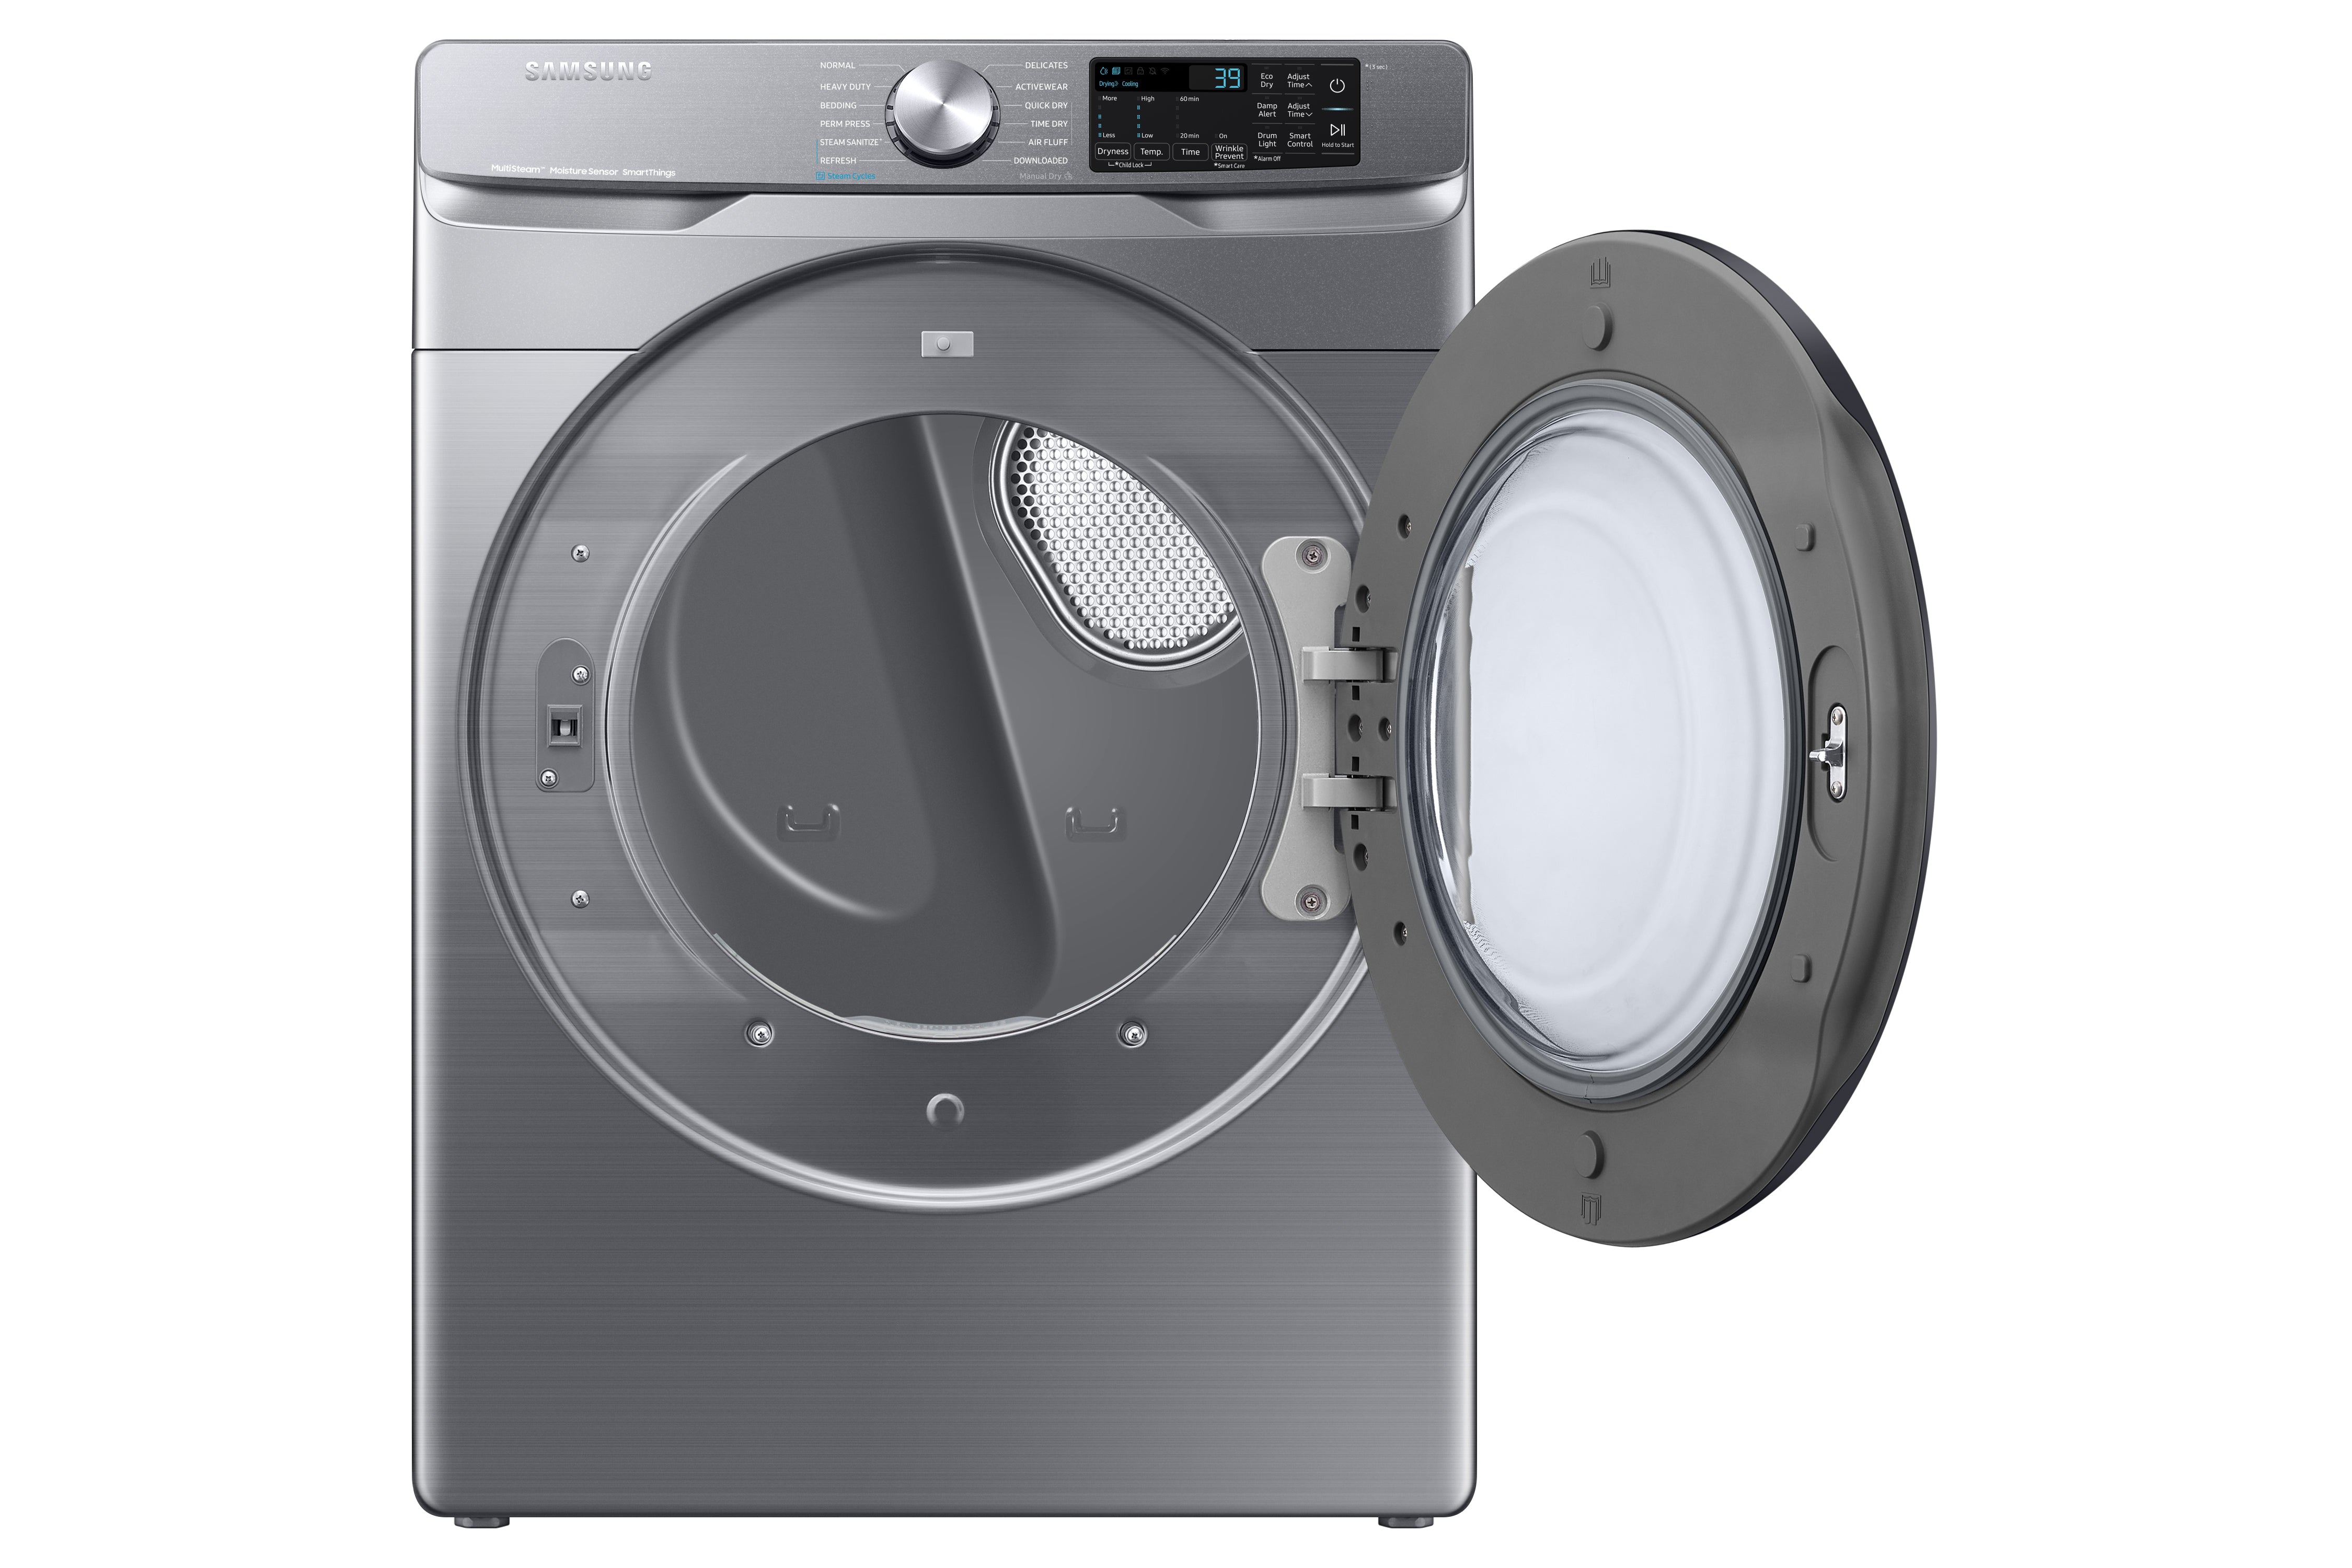 Samsung - 7.5 cu. Ft  Electric Dryer in Platinum - DVE45B6305P